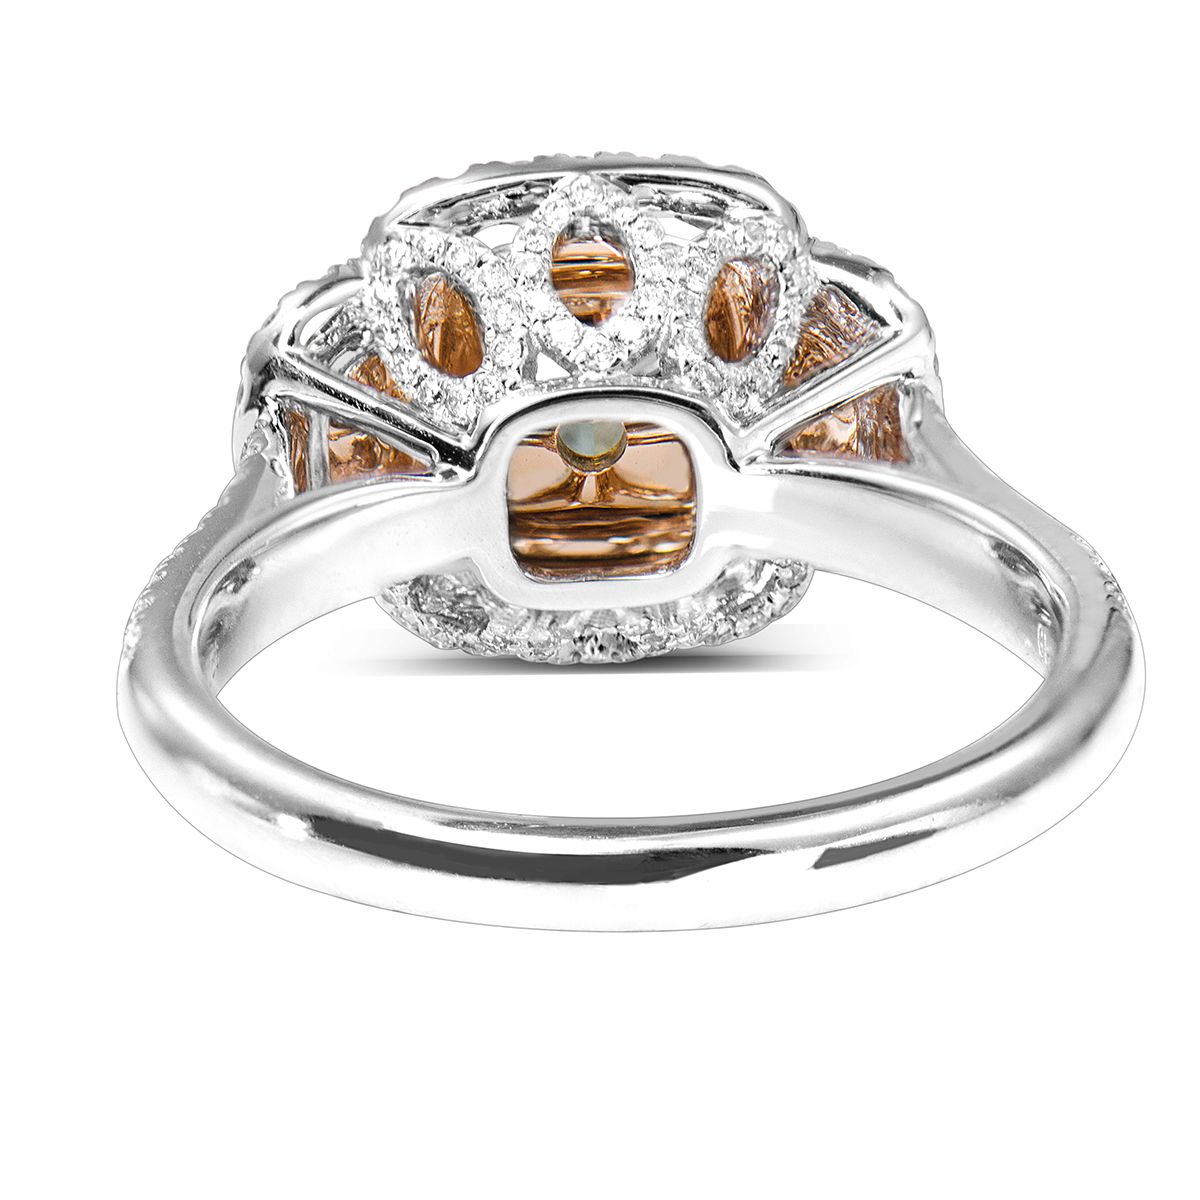 Fancy Grayish Greenish Yellow Diamond Ring, 1.93 Ct. TW, Cushion shape, GIA Certified, 2156011579